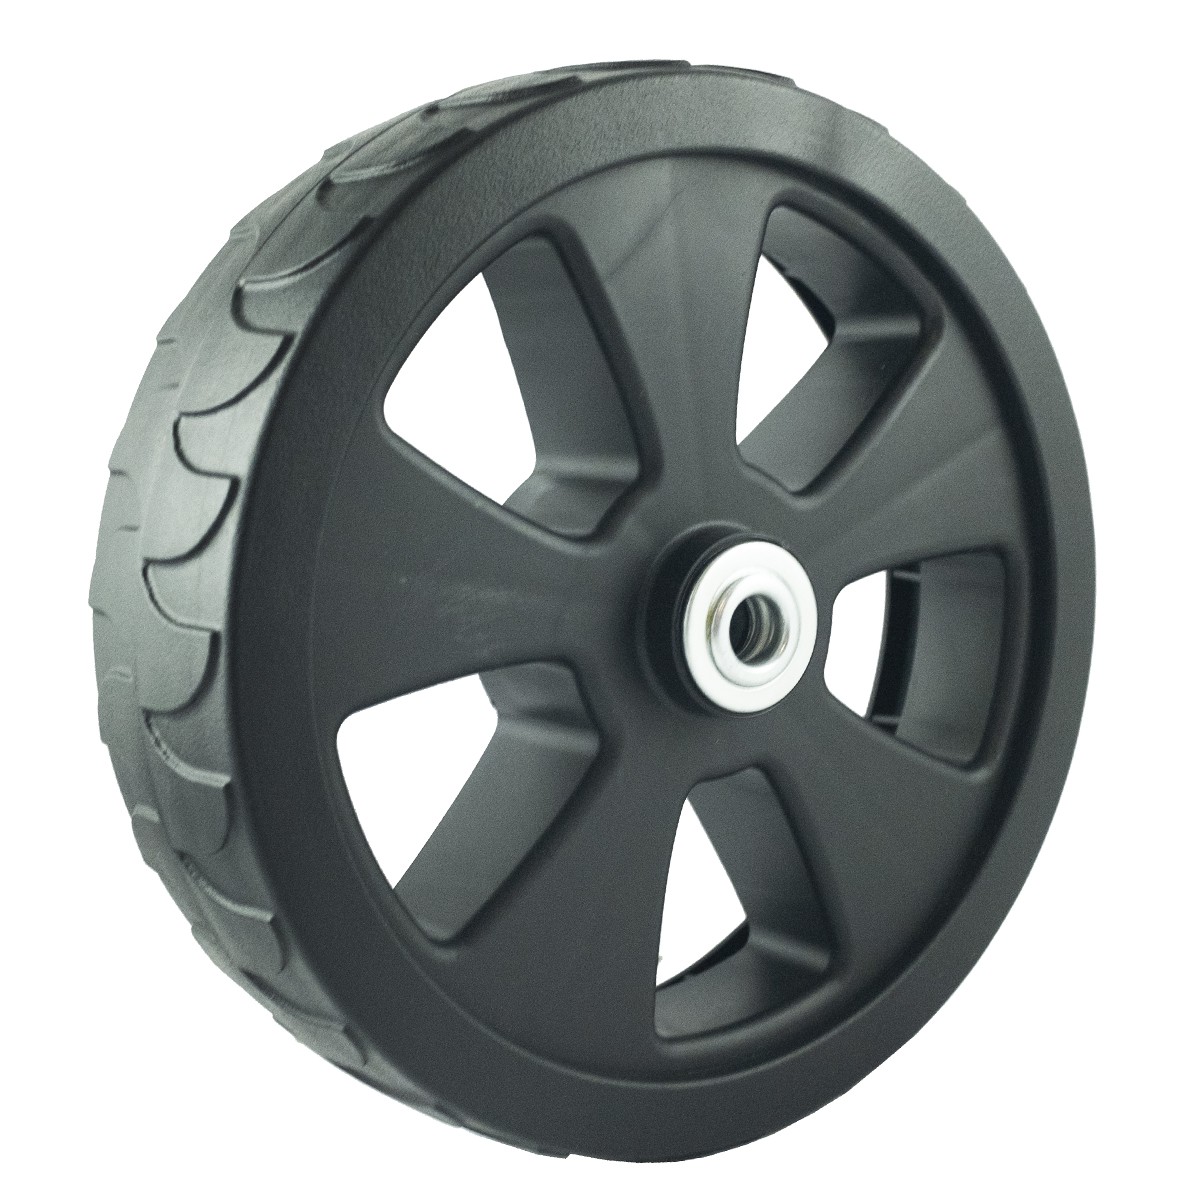 AL-KO Comfort mower wheel / 200 mm / 462670